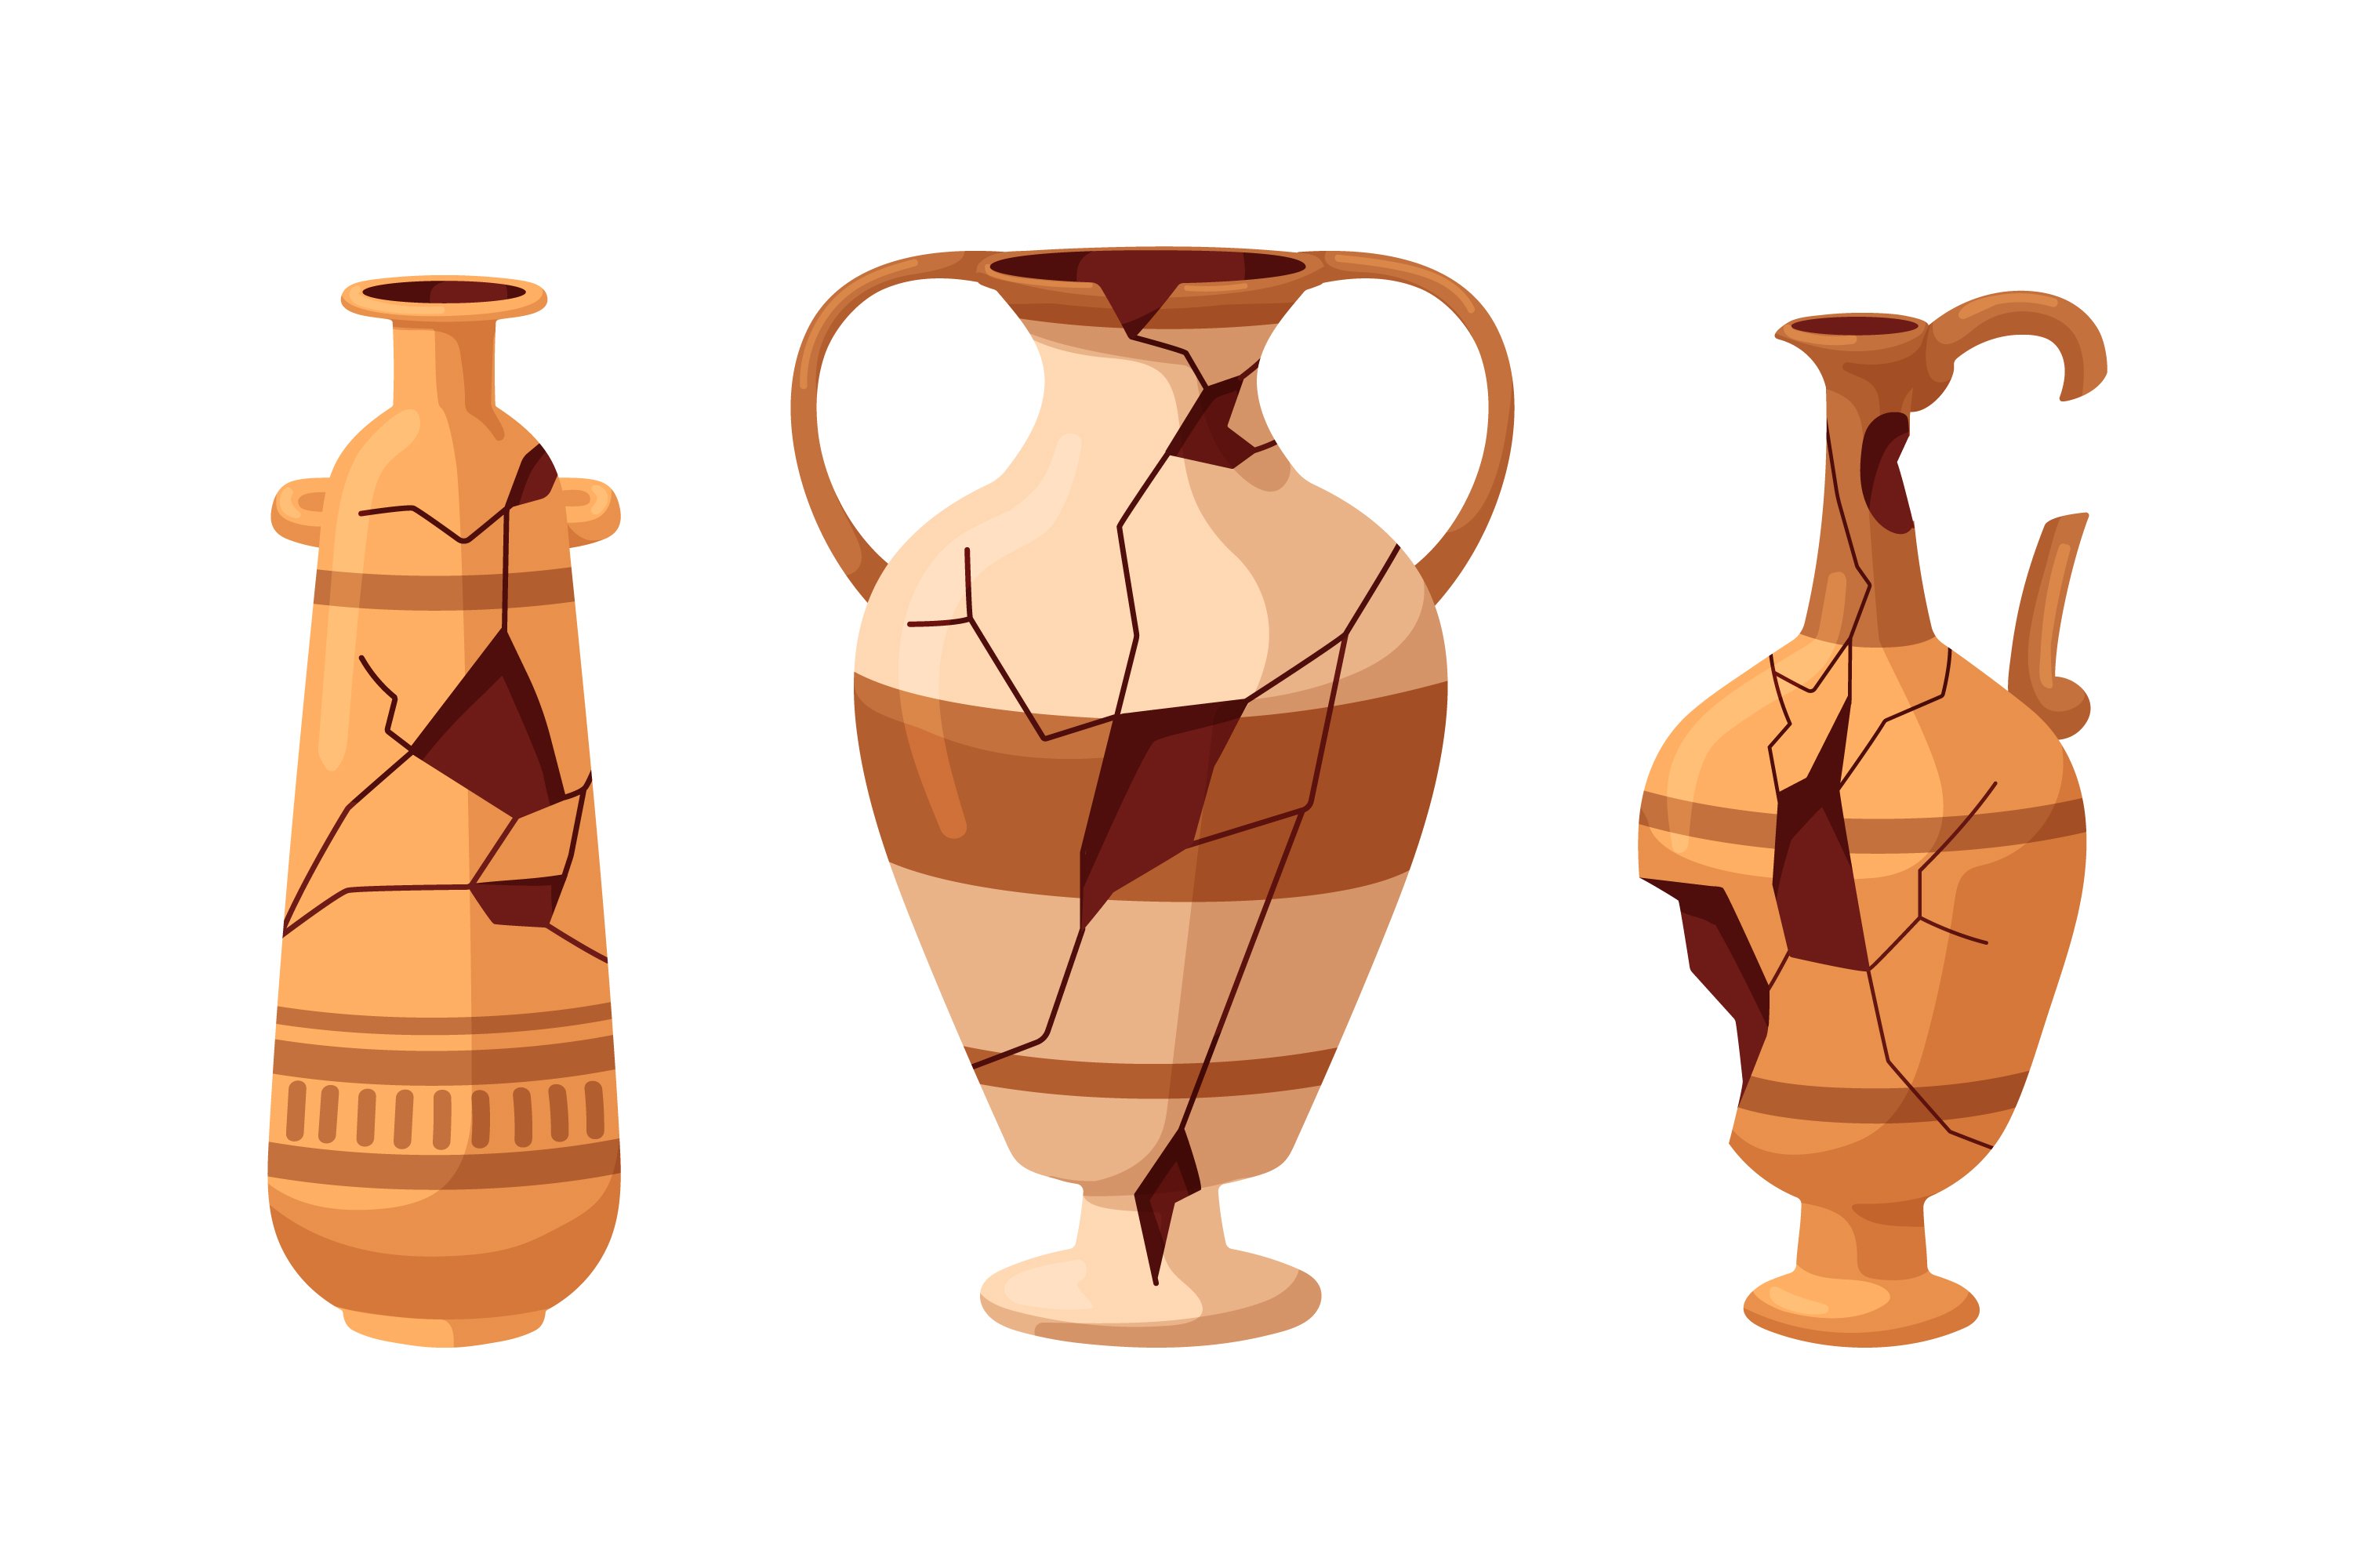 Old broken pottery vases set preview image.